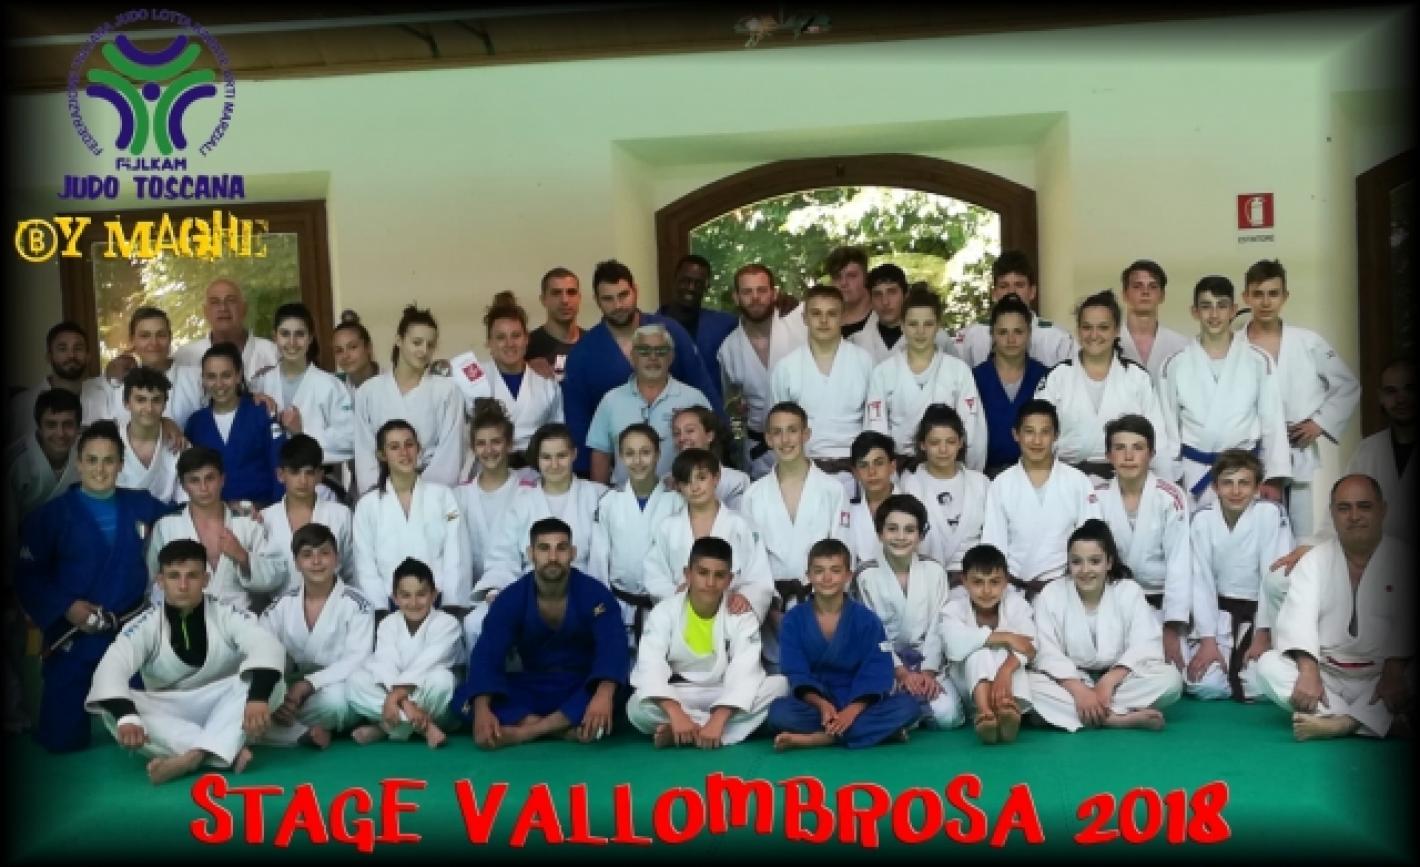 images/toscana/Foto/Judo/2018/medium/vallombrosa_stage2018_01.jpg